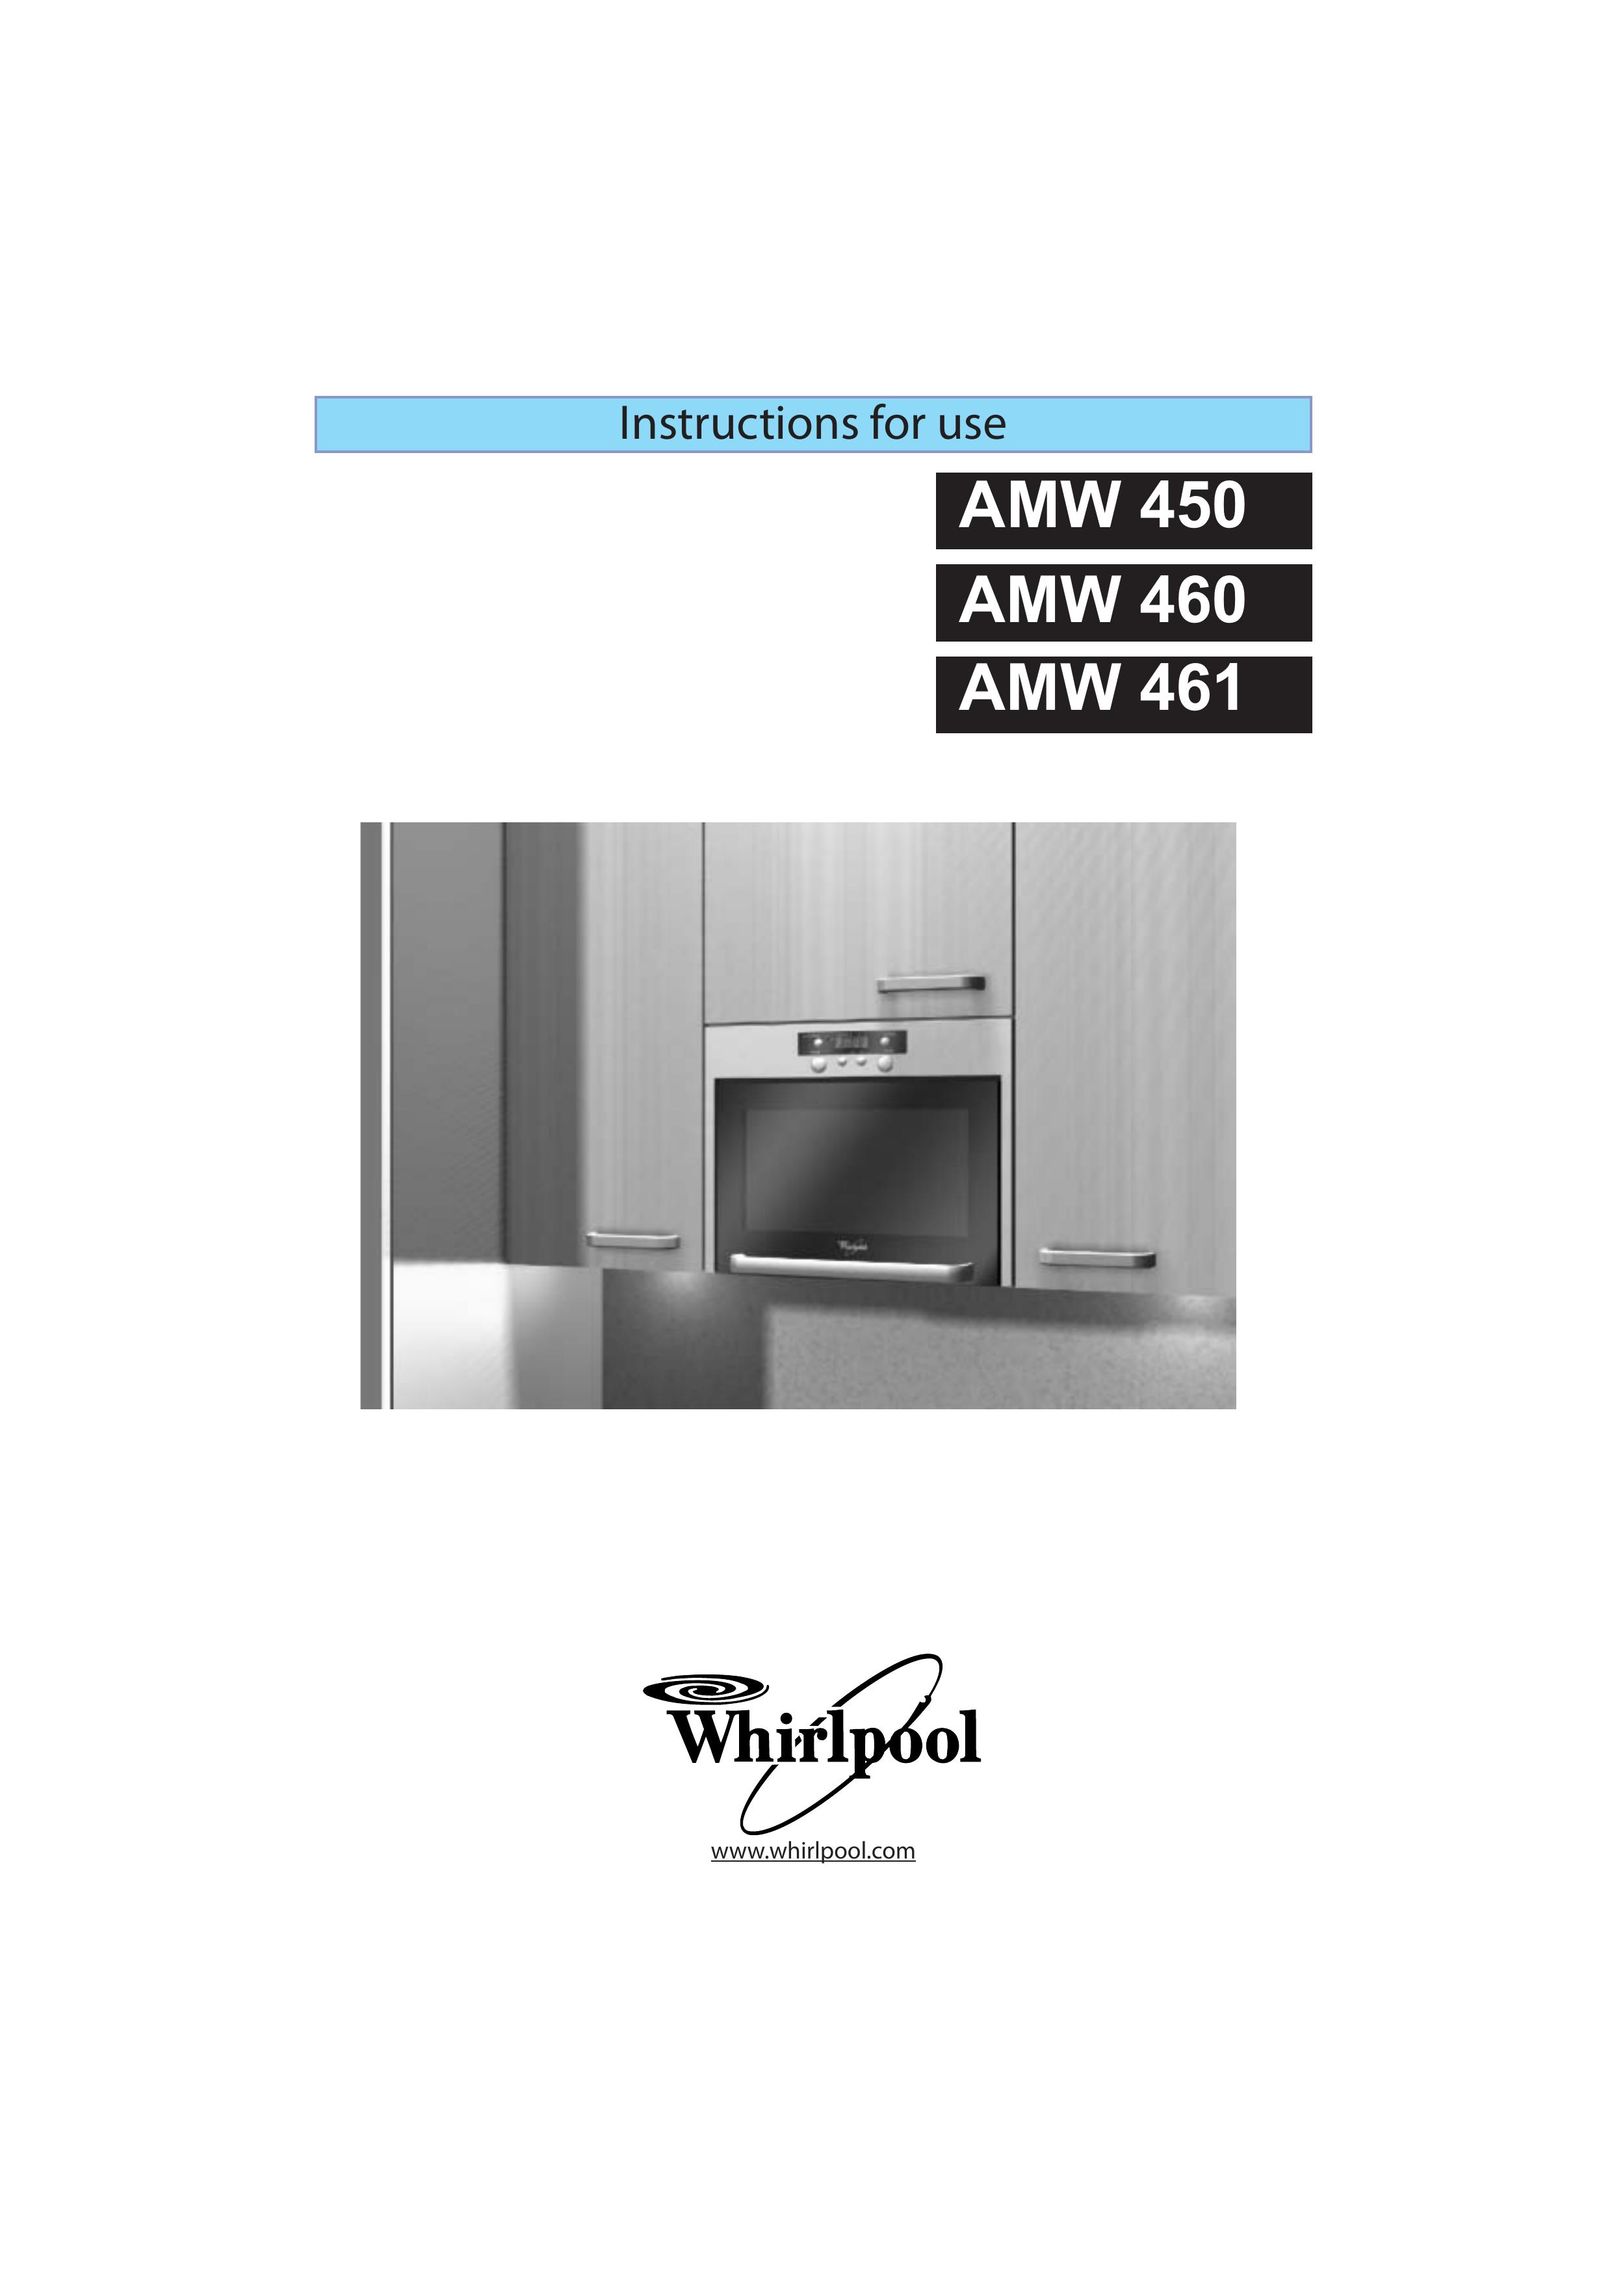 Whirlpool AMW 460 Microwave Oven User Manual